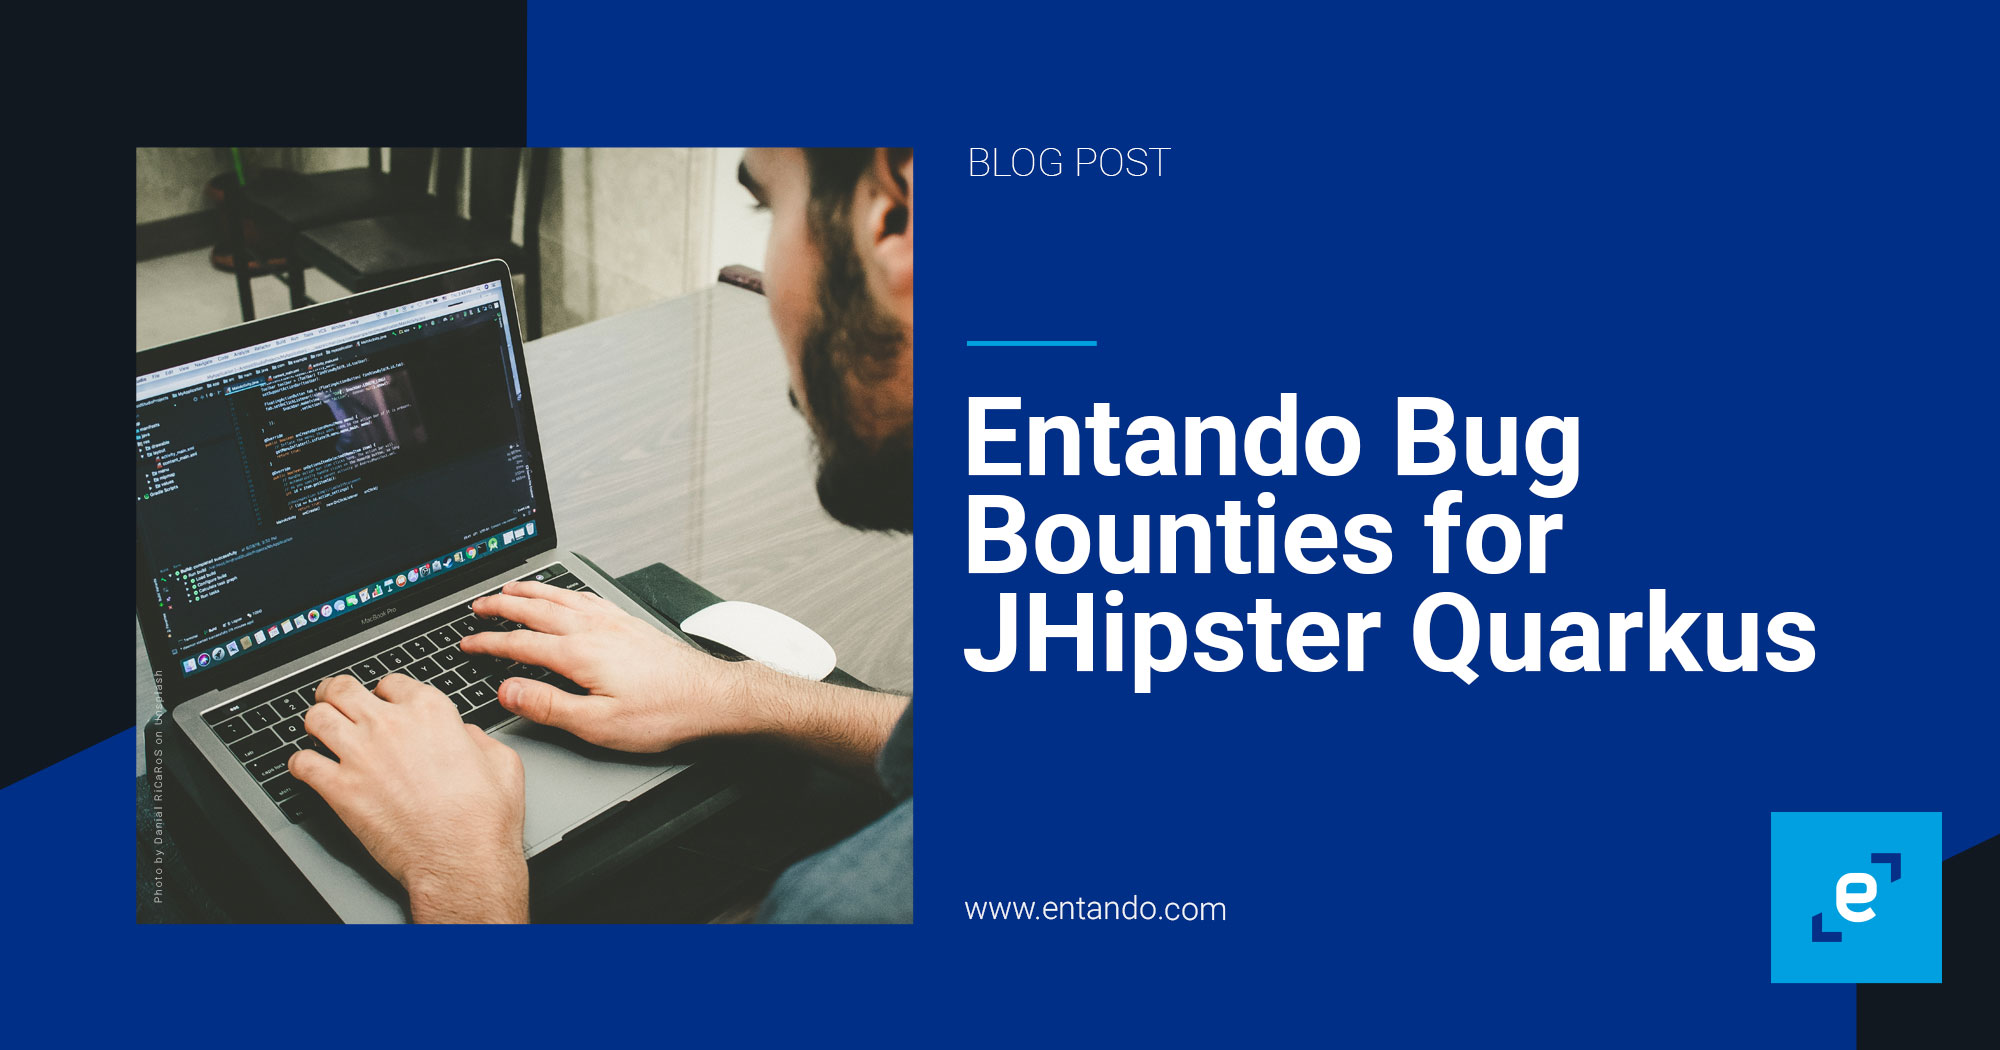 Blog_Entando-Bug-Bounties-for-JHipster-Quarkus.jpg